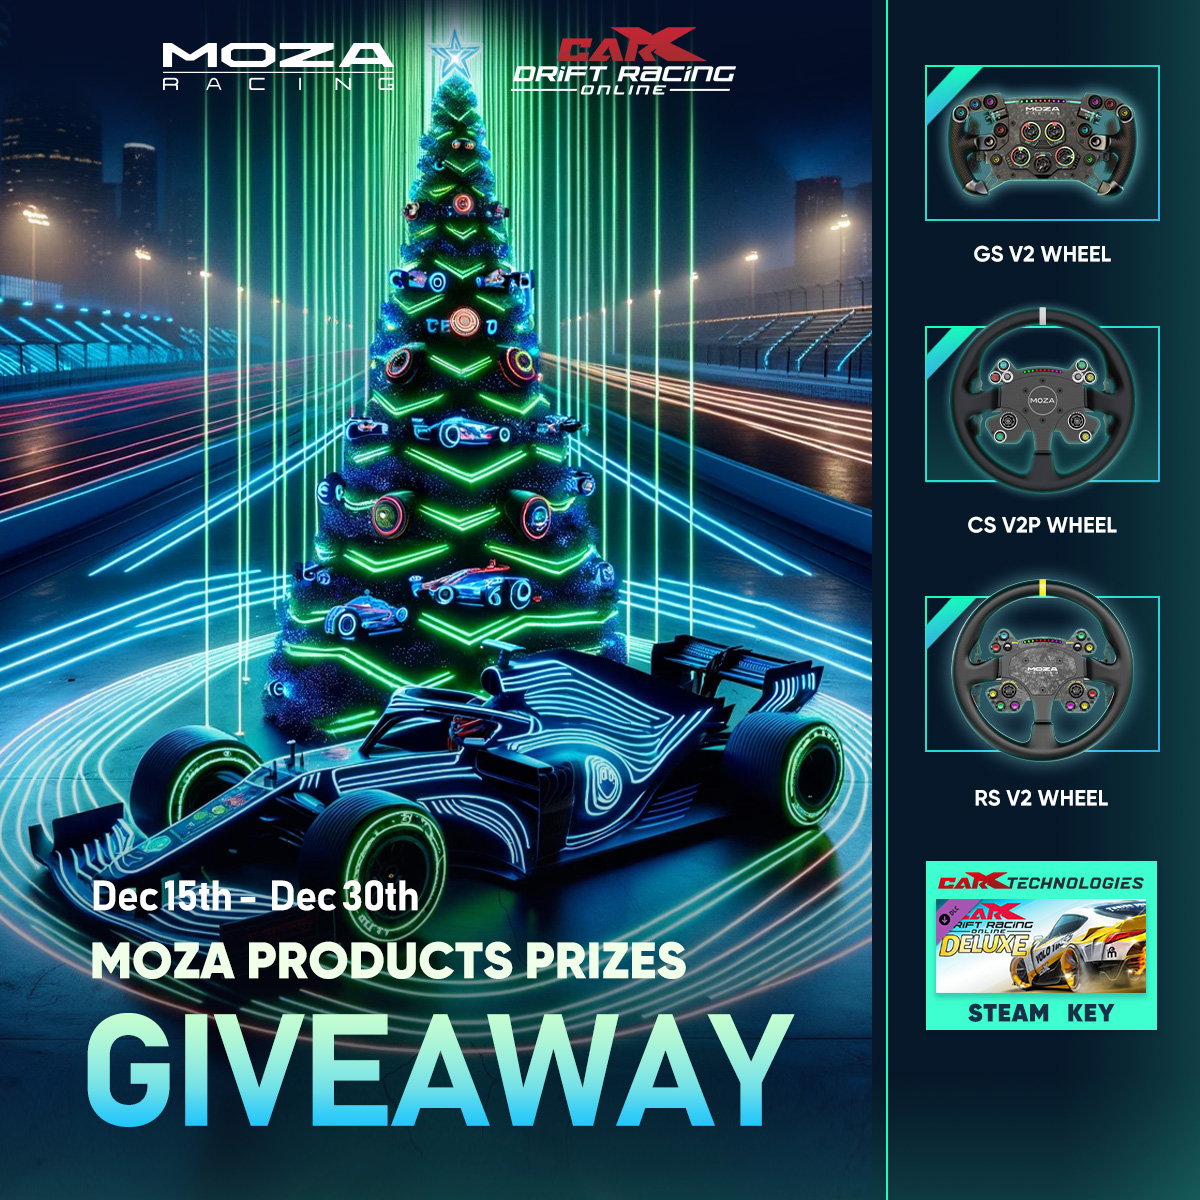 MOZA Racing – Applications sur Google Play